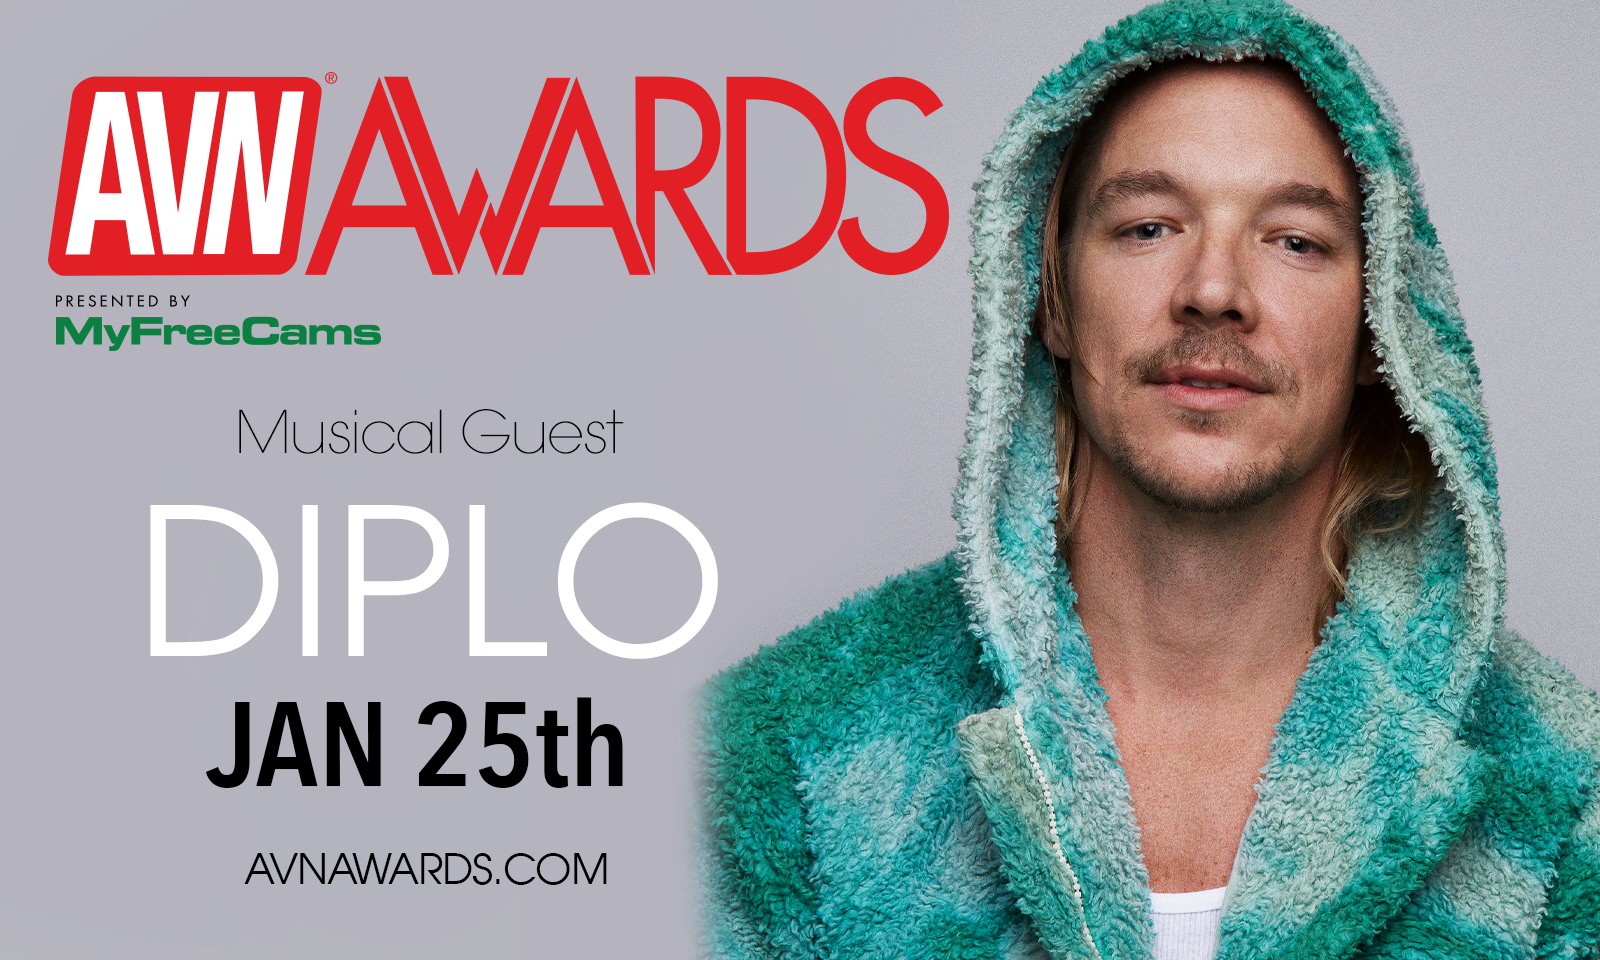 Artist, Producer & DJ Diplo Named 2020 AVN Awards Musical Guest